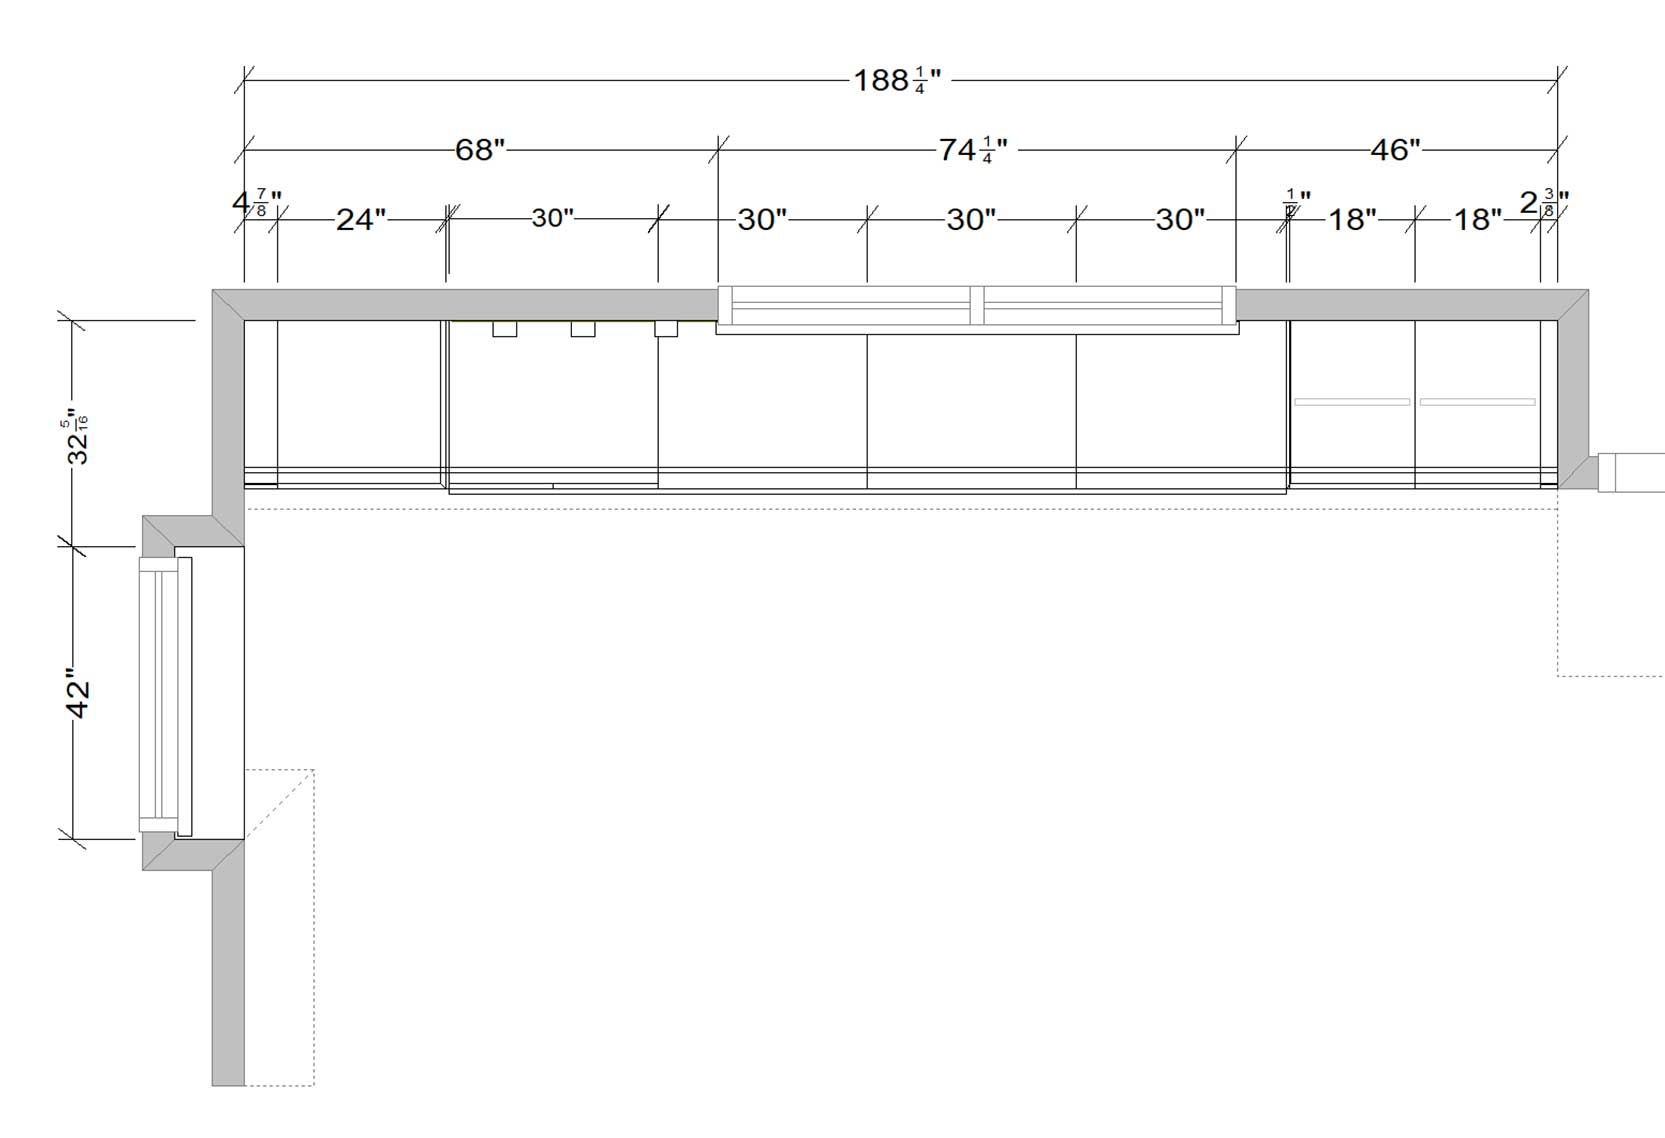 floorplan for an IKEA mudroom design